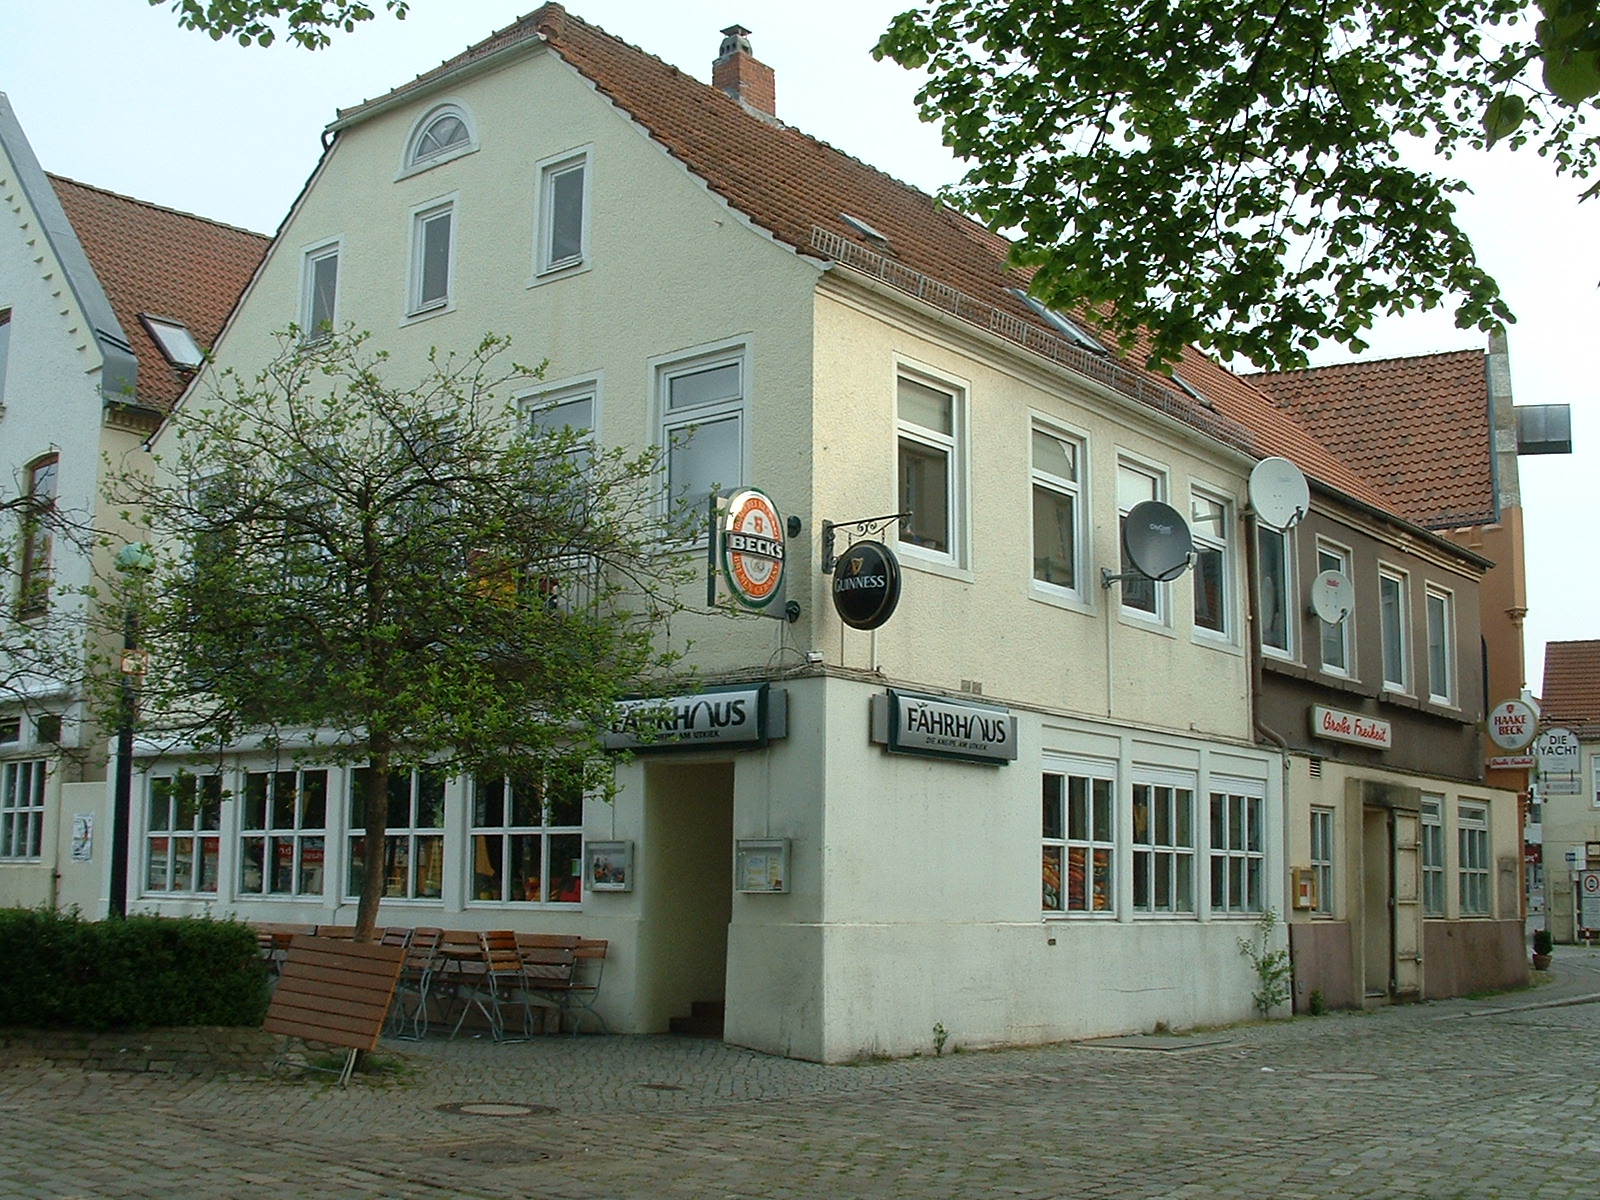 Fährhaus - Kneipe in Vegesack